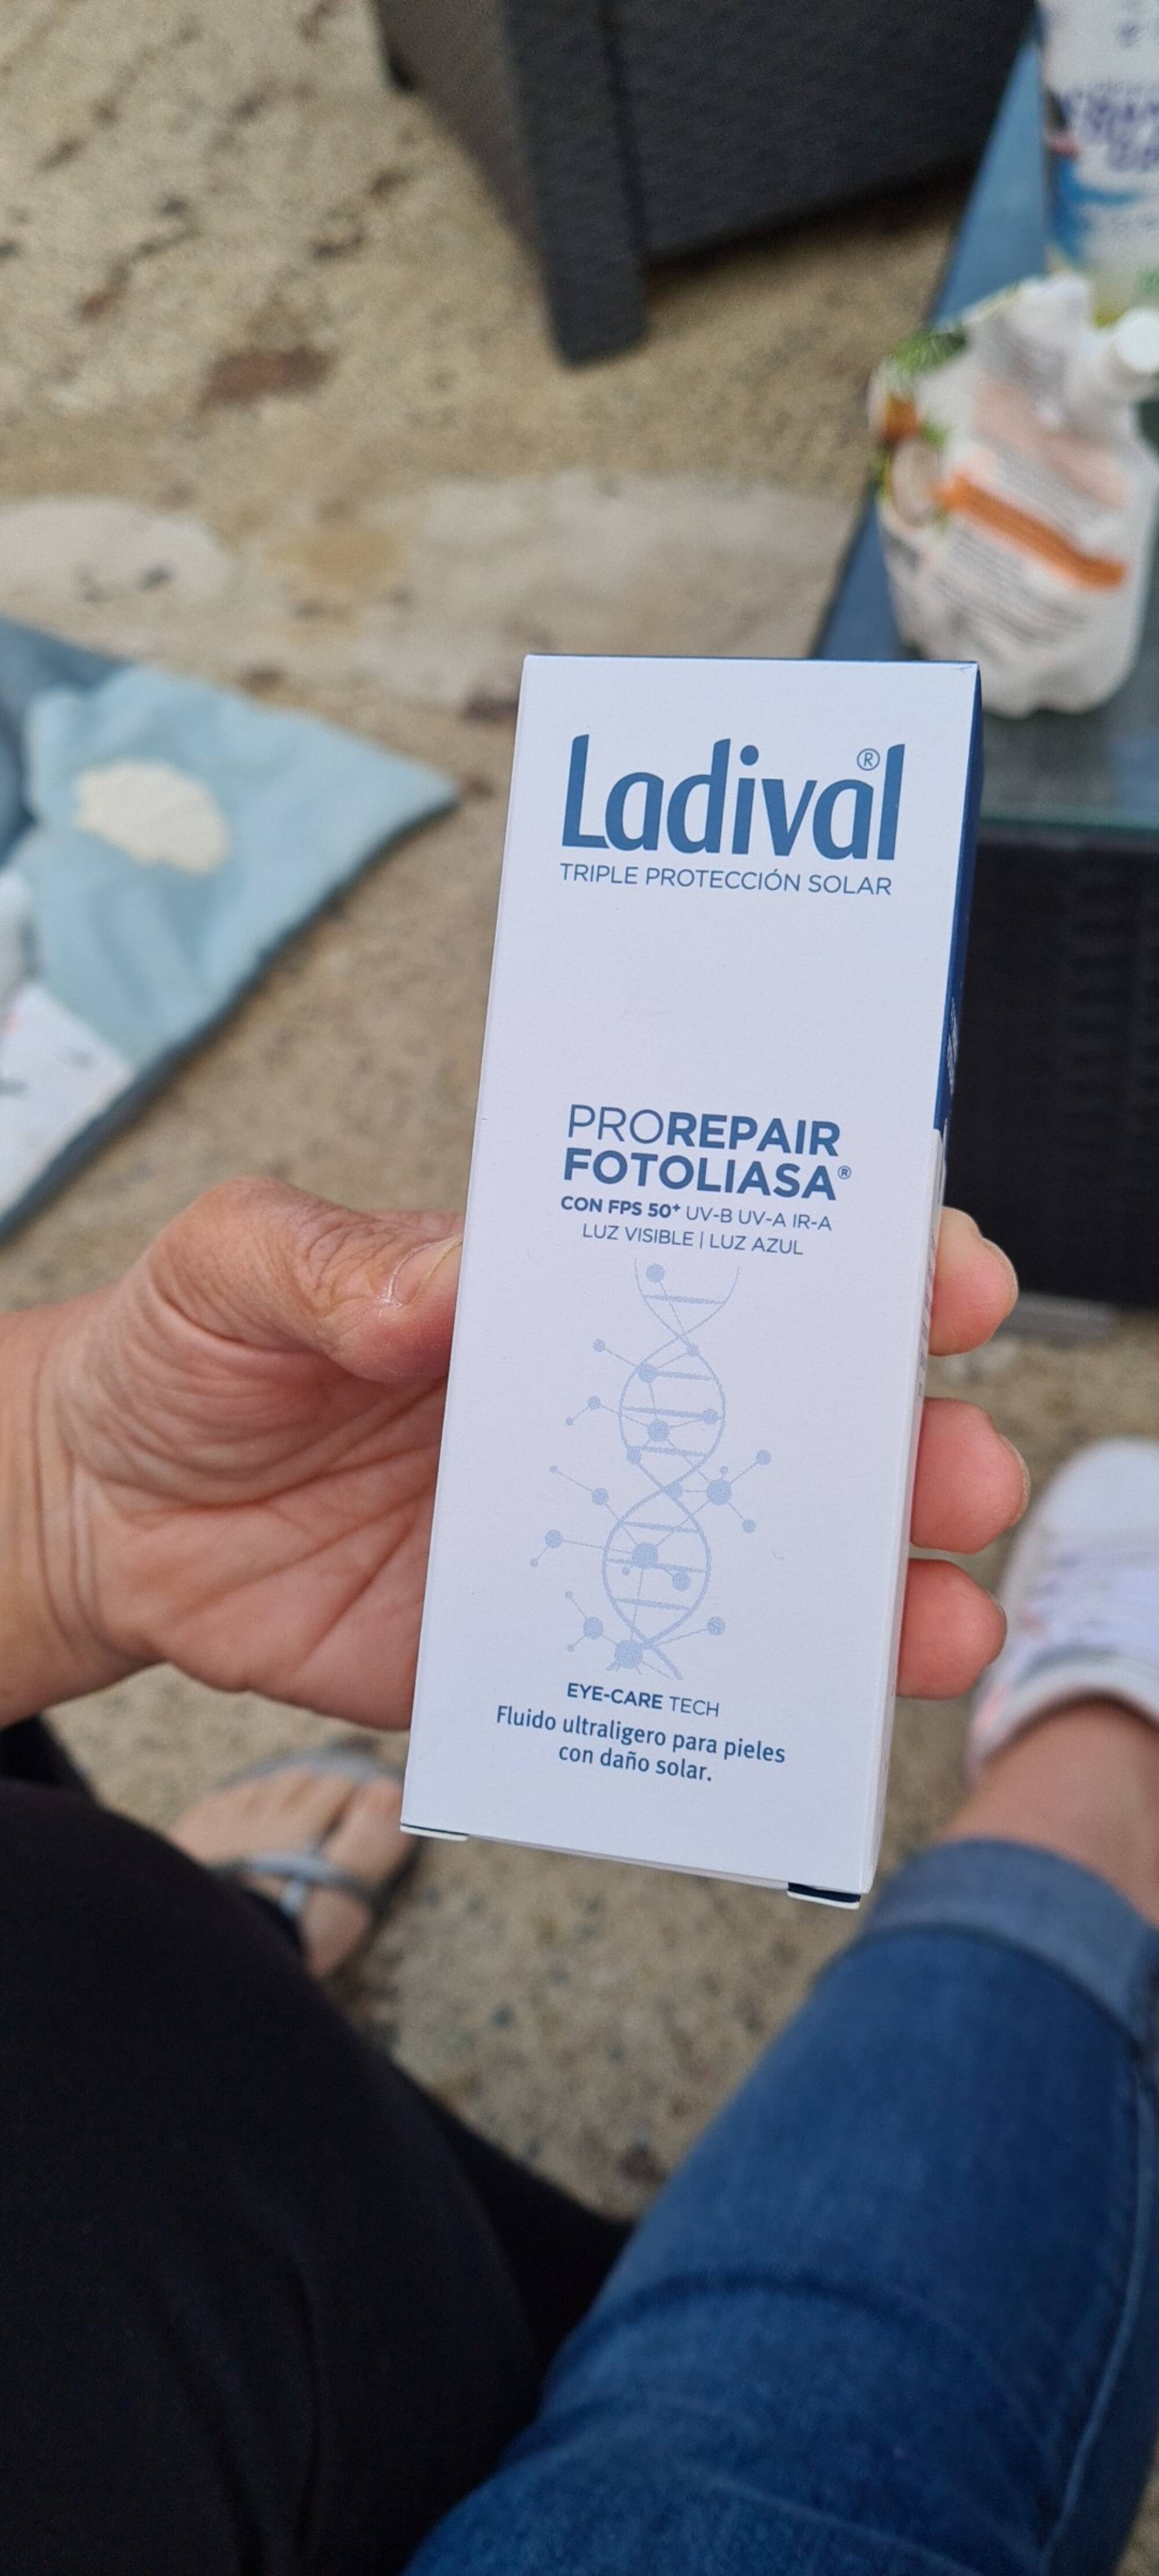 LADIVAL - Prorepair fotoliasa - Eye-care tech